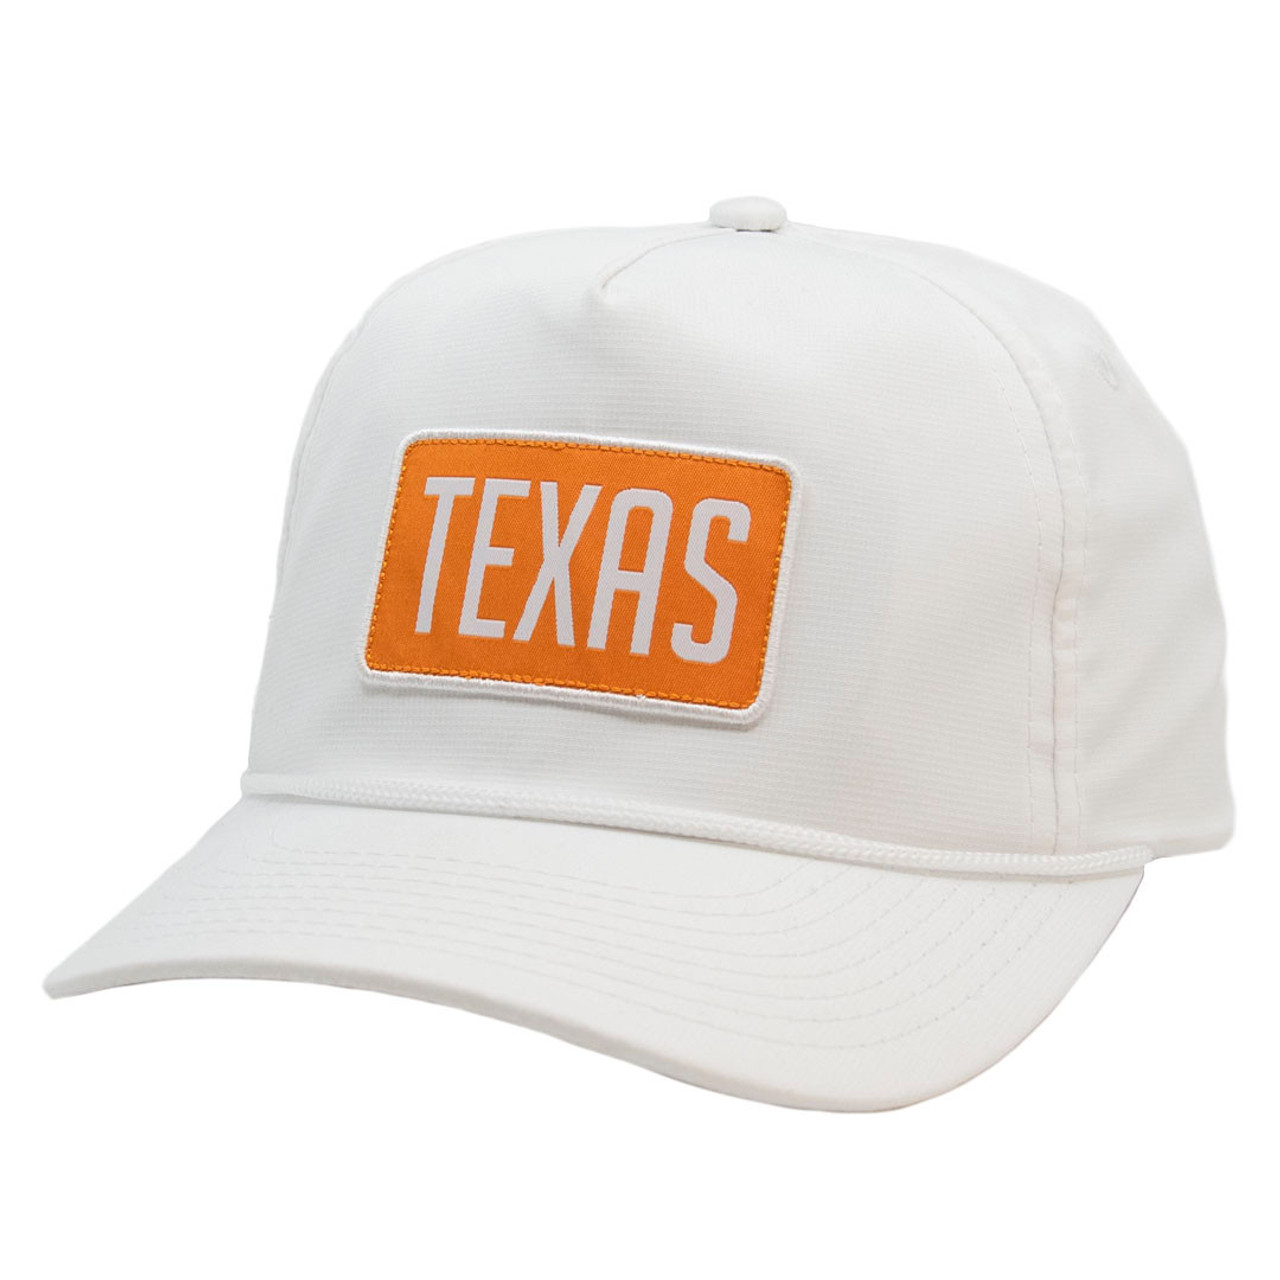 TYLER'S Texas Patch Golf UV Snapback Hat $ 34.99 | TYLER'S